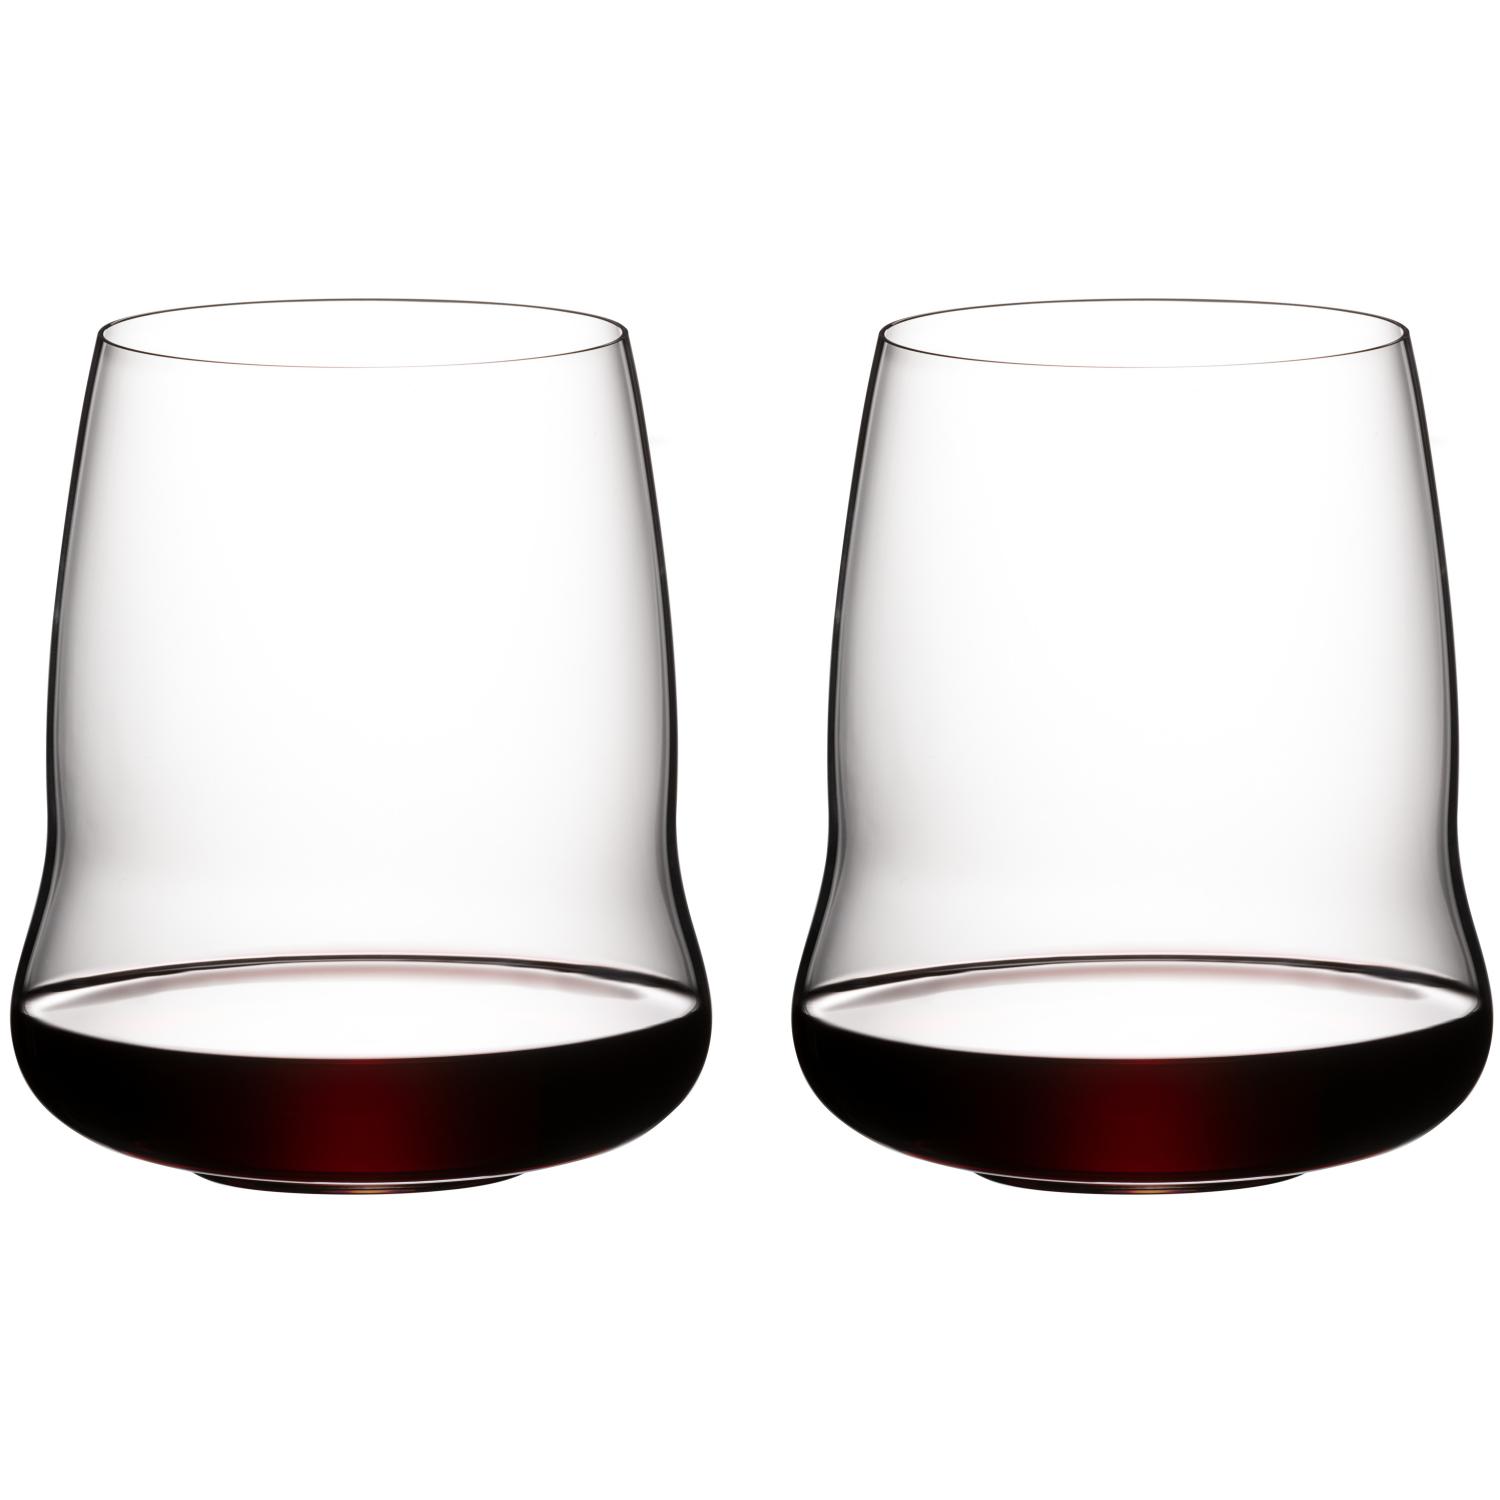 2 бокала для красного вина RIEDEL Stemless Wings Cabernet/Merlot 675 мл (арт. 6789/0)